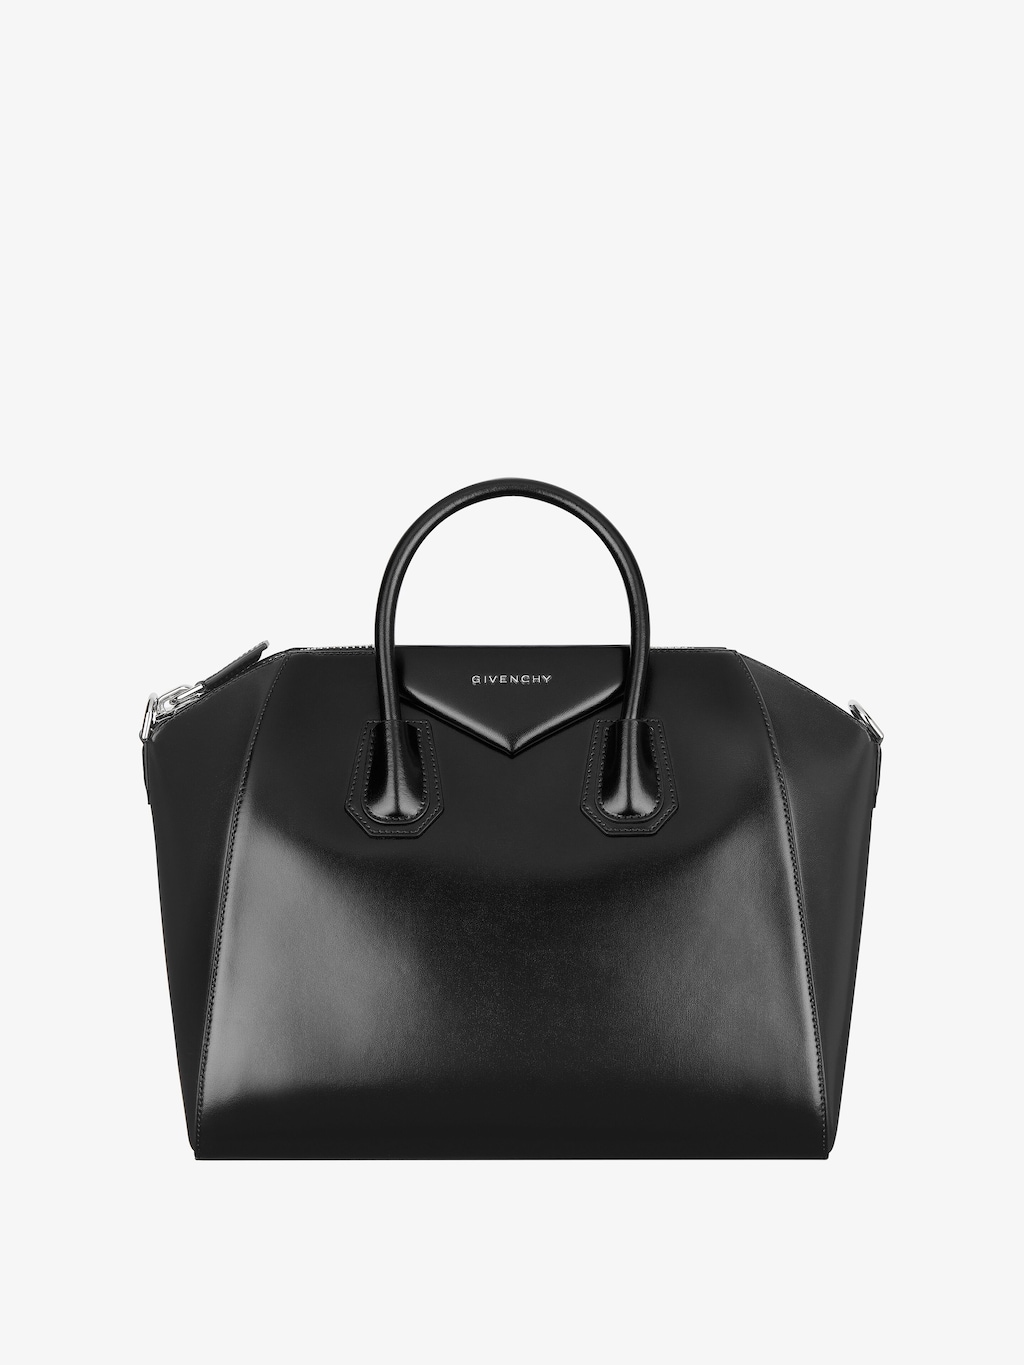 Medium Antigona bag in Box leather | Givenchy US | Givenchy